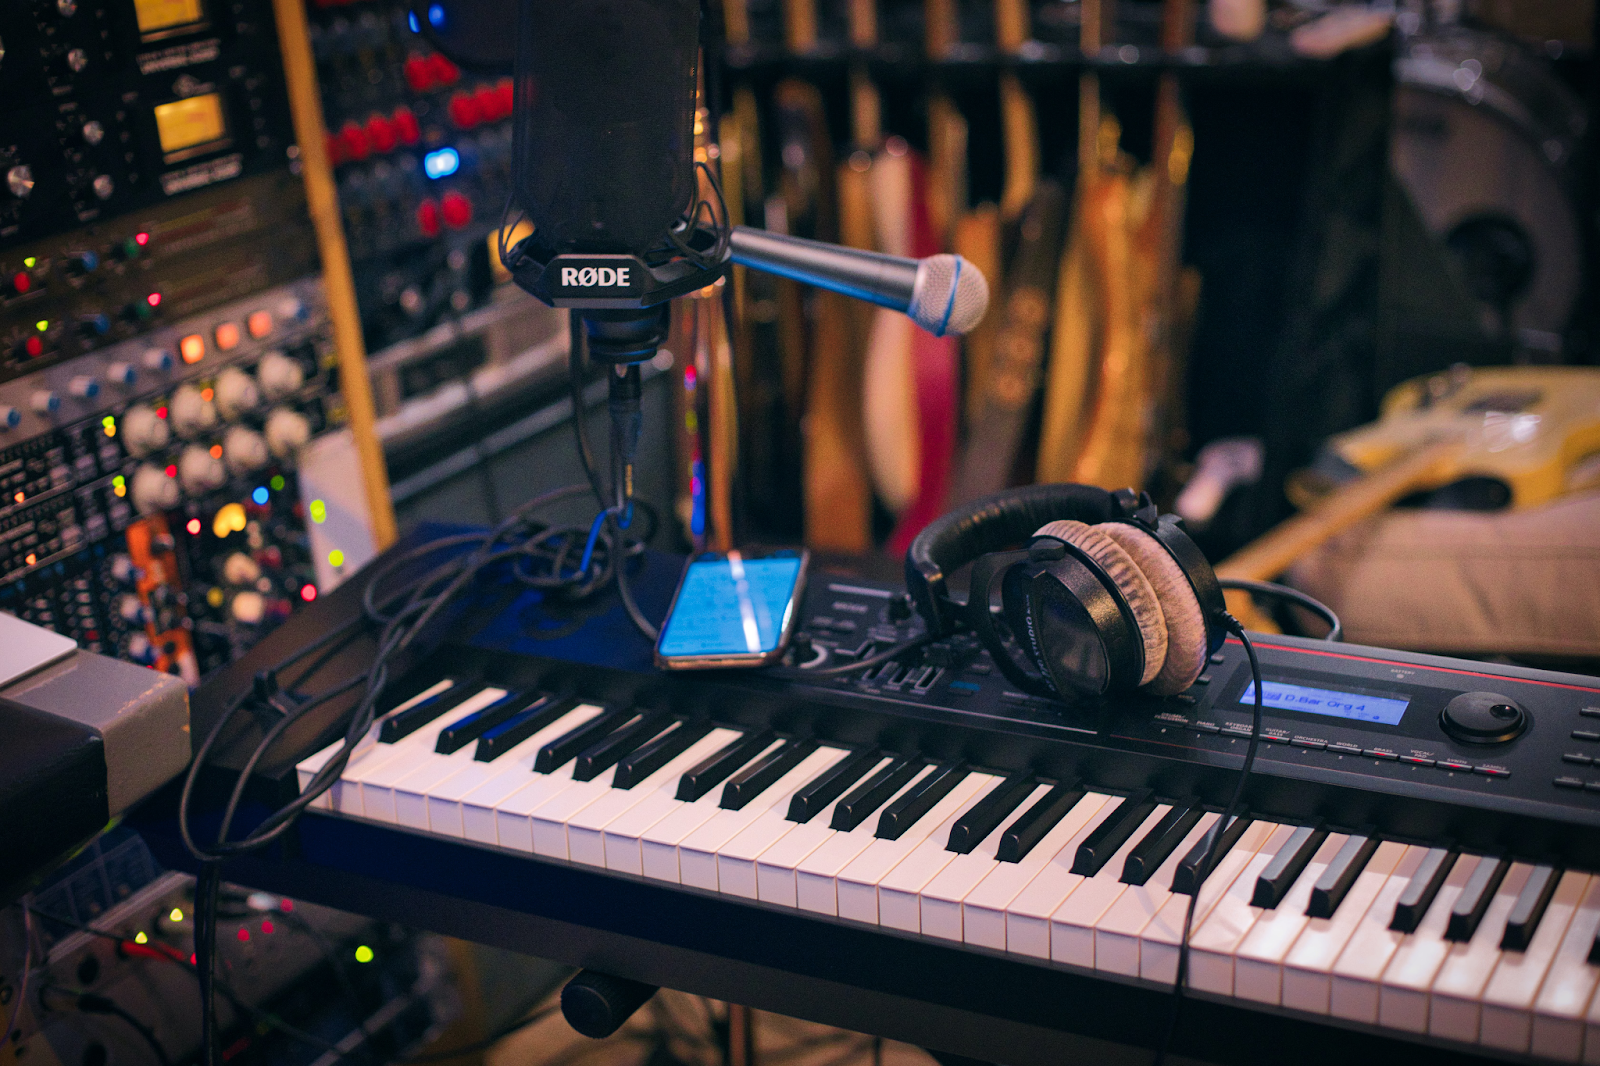 Keyboard in the music studio, music production in progress.